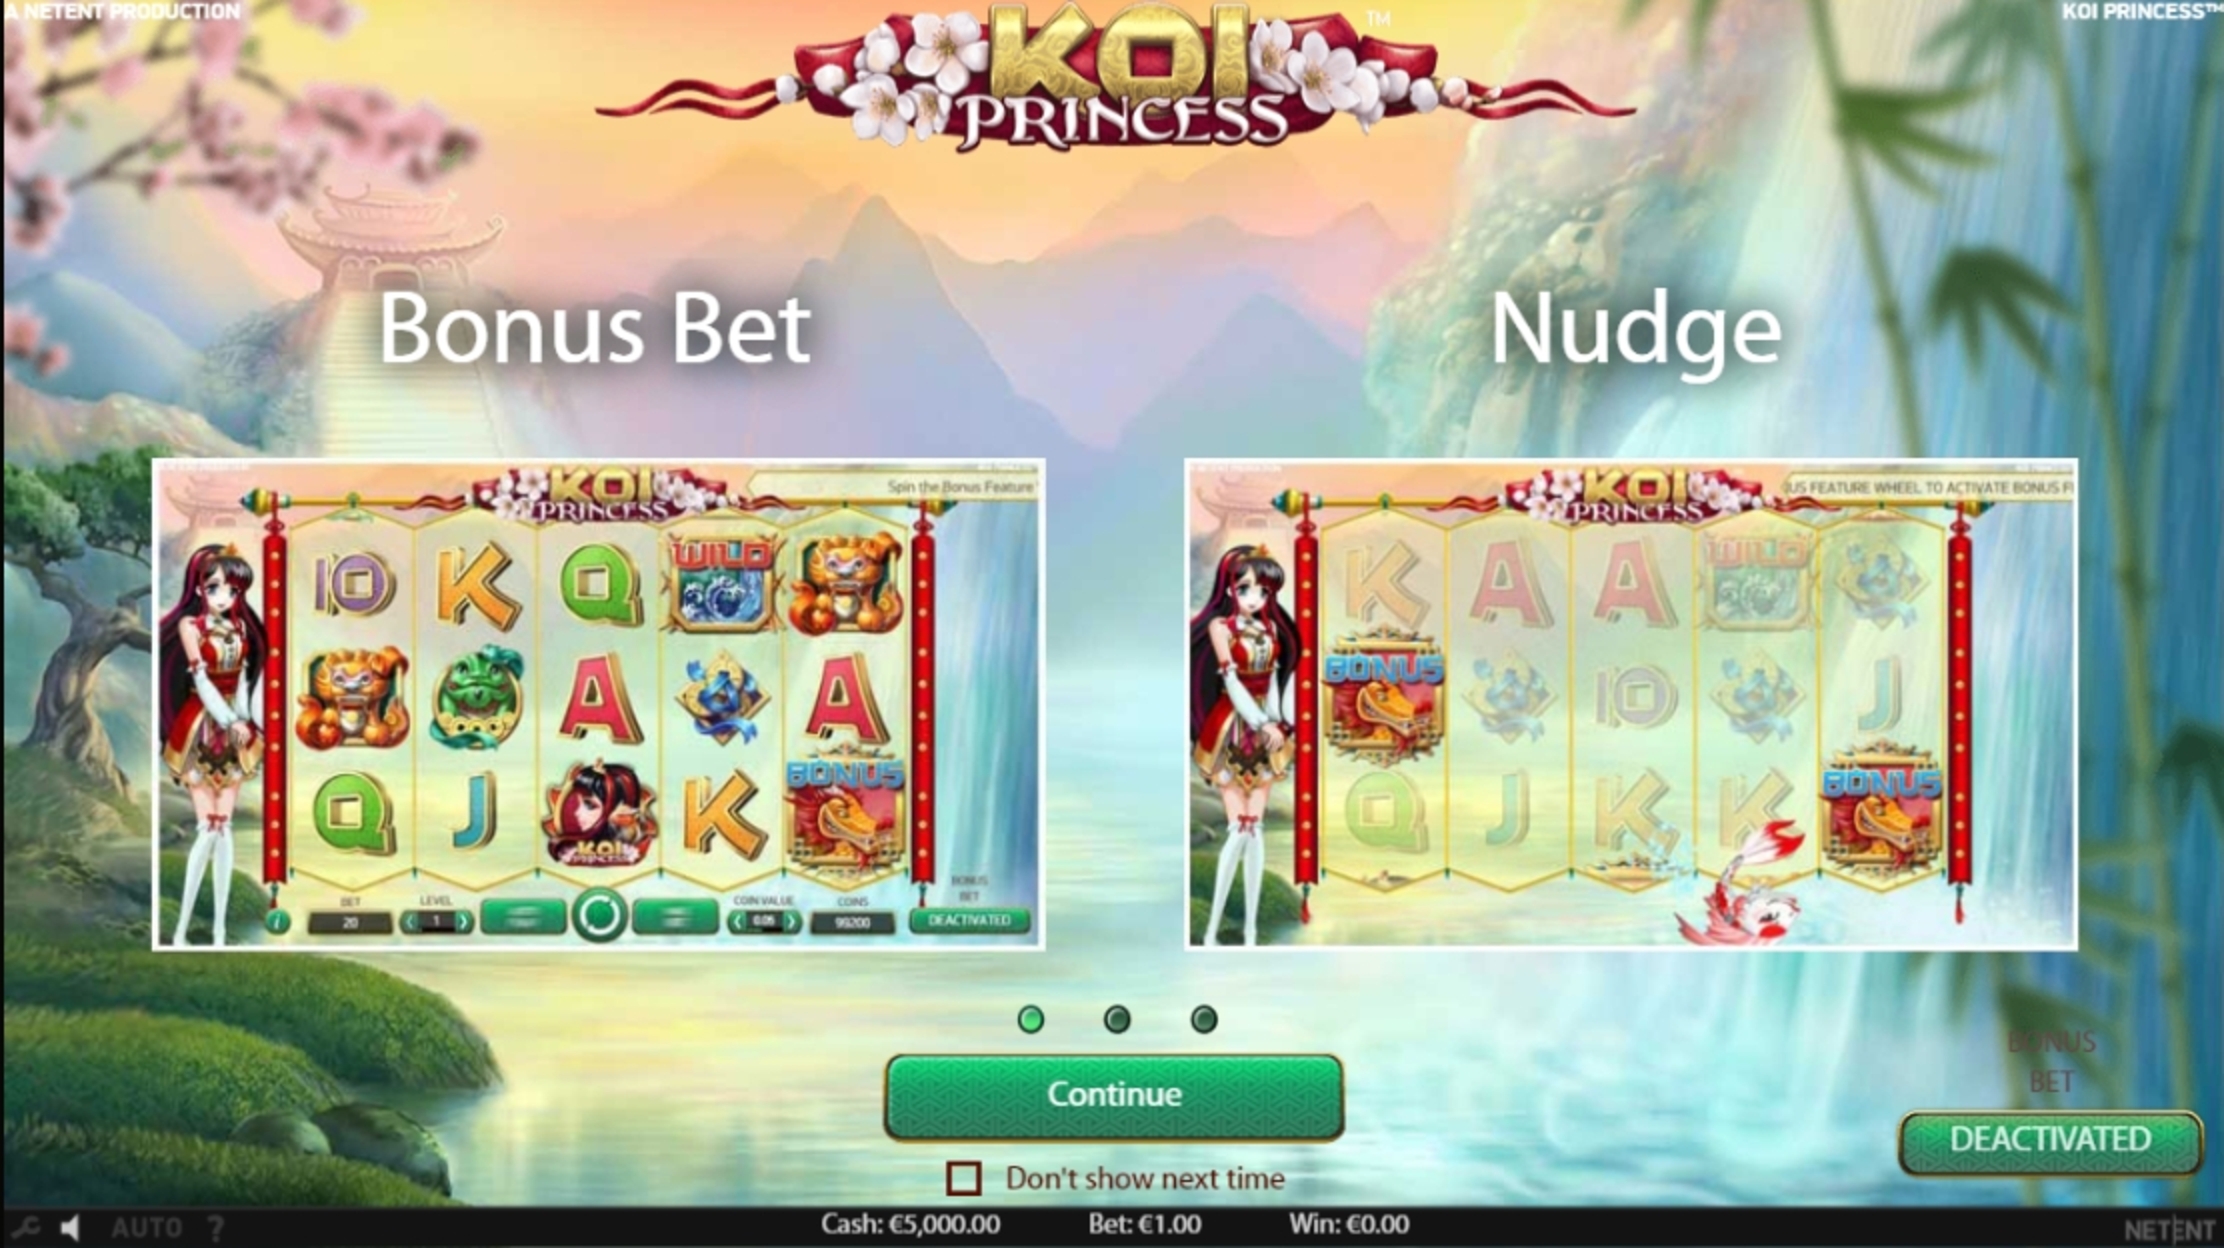 Play Koi Princess Free Casino Slot Game by NetEnt